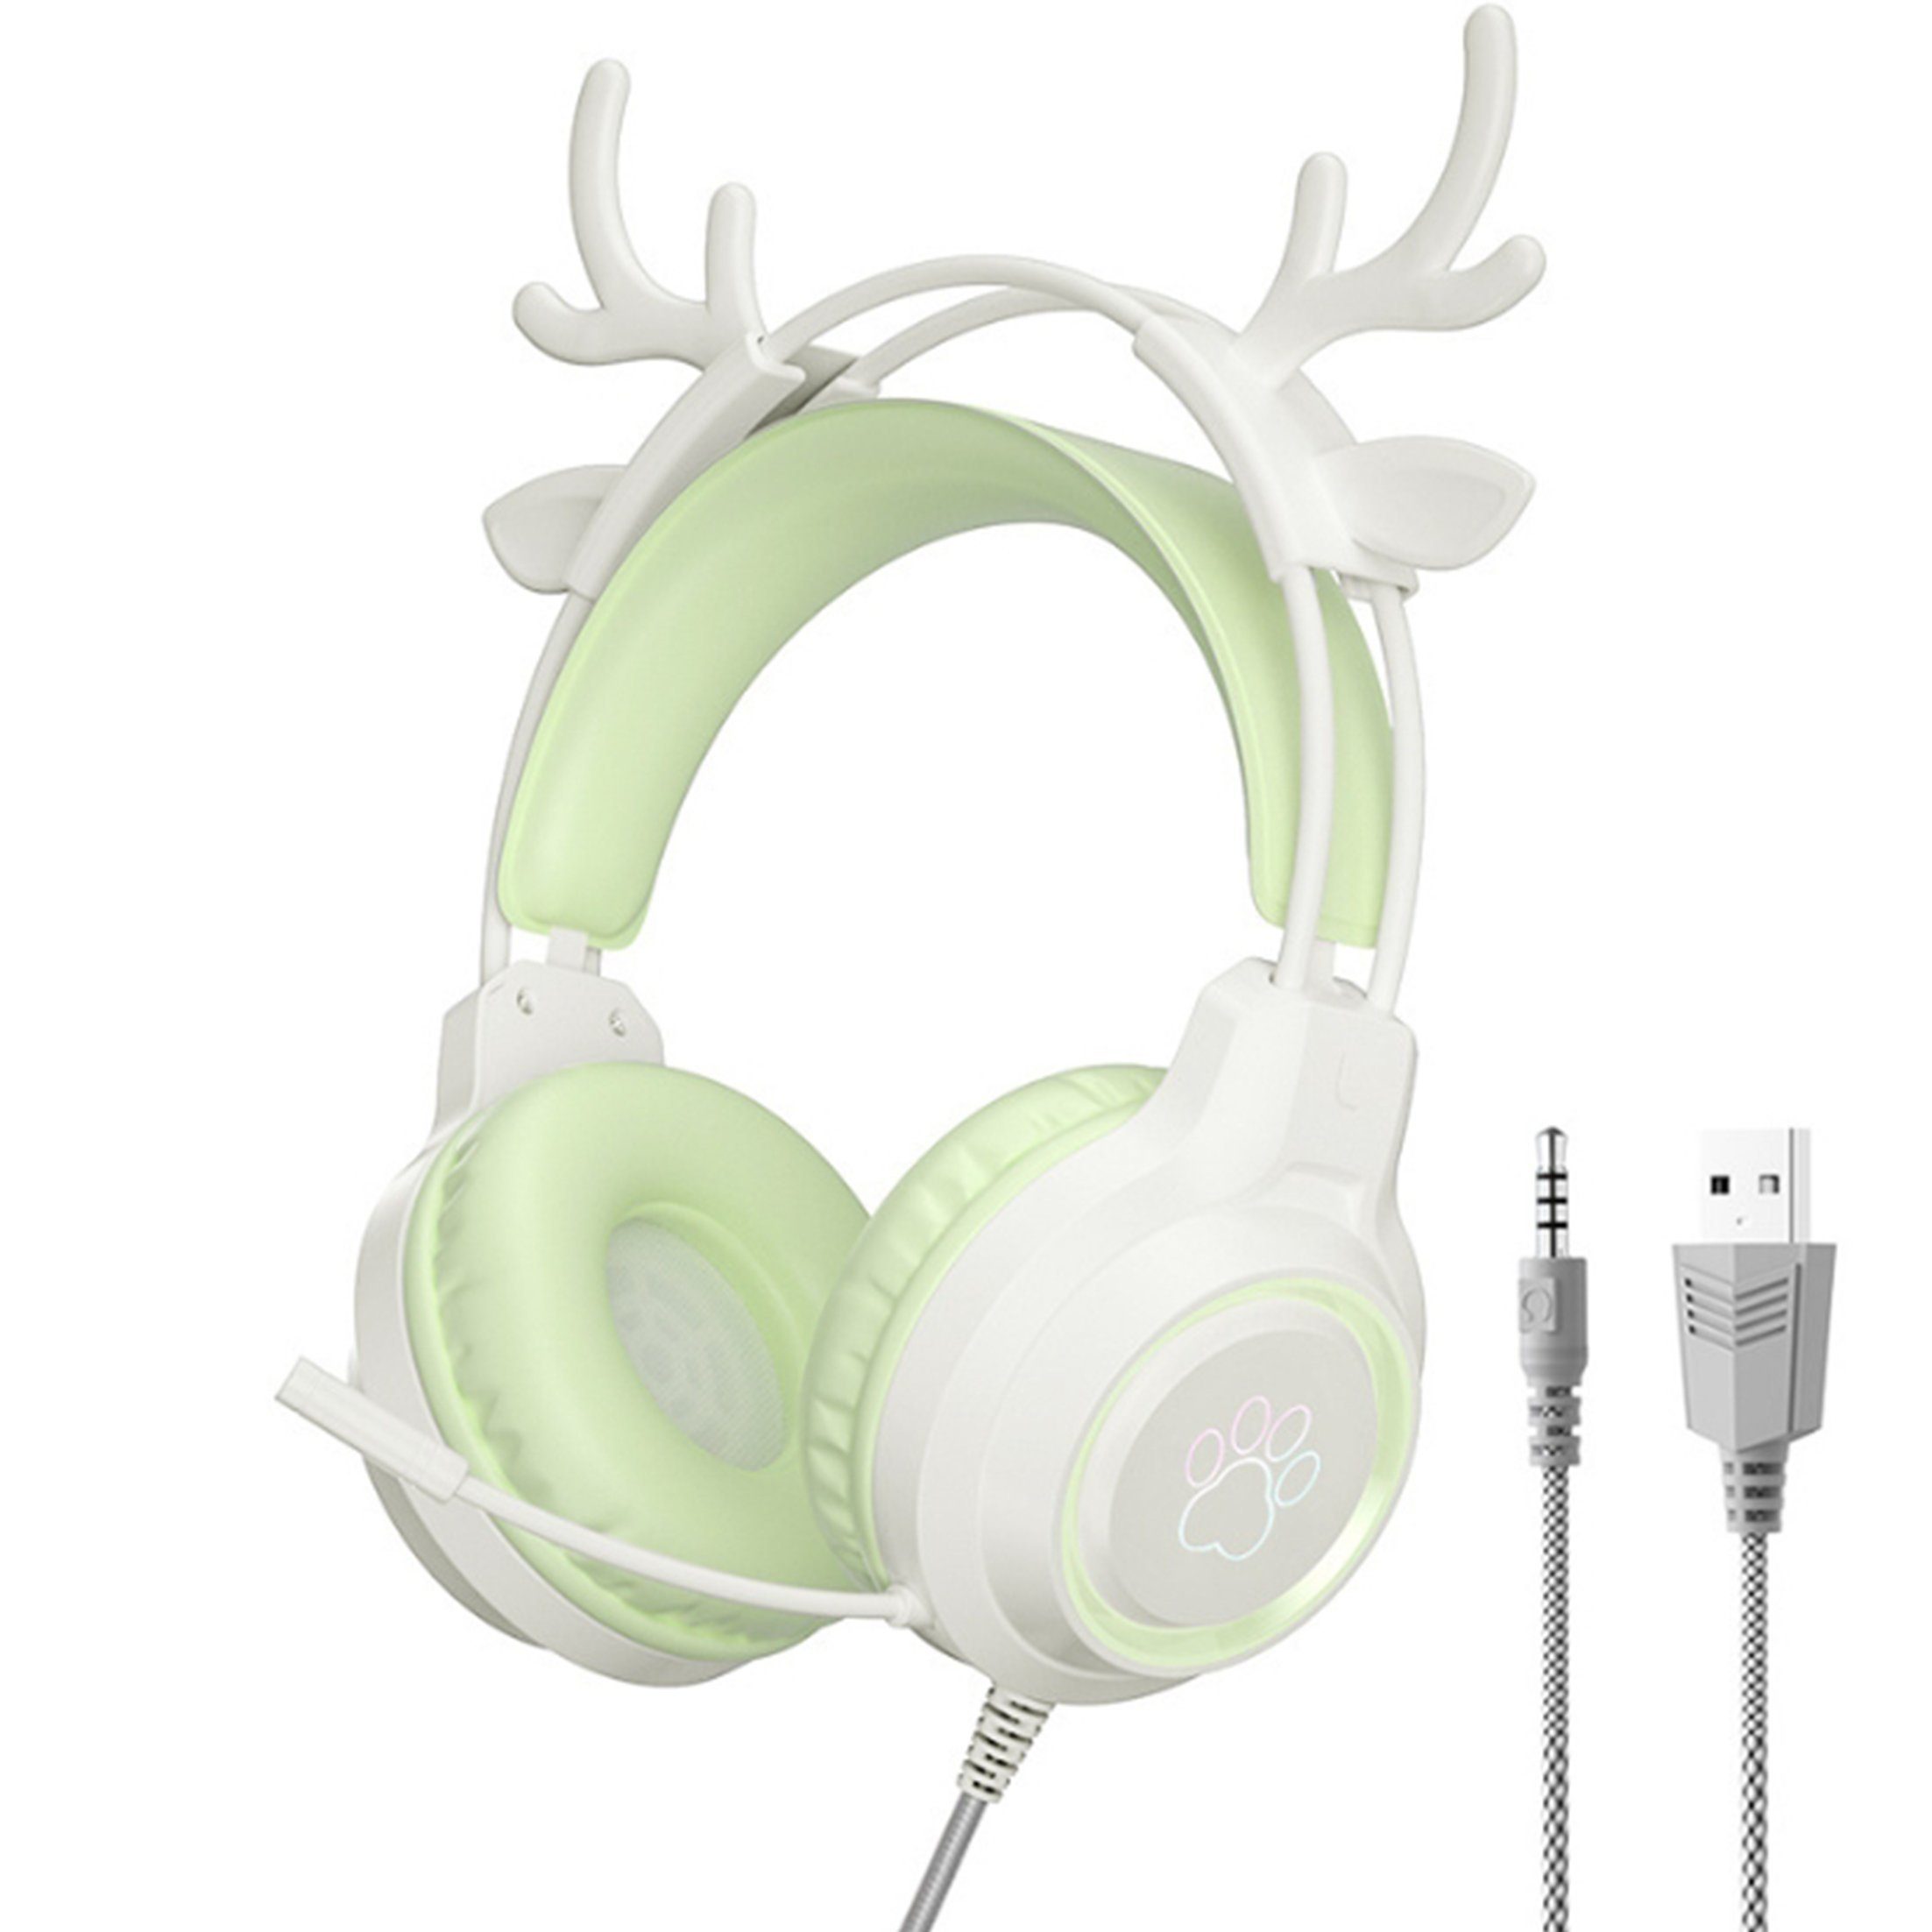 KINSI Headset,Gaming-Headset mit Katzenohren,Geräuschunterdrückung Over-Ear-Kopfhörer (Hirschohren, Stereo, Abnehmbare Katzenohren, Klappbar)